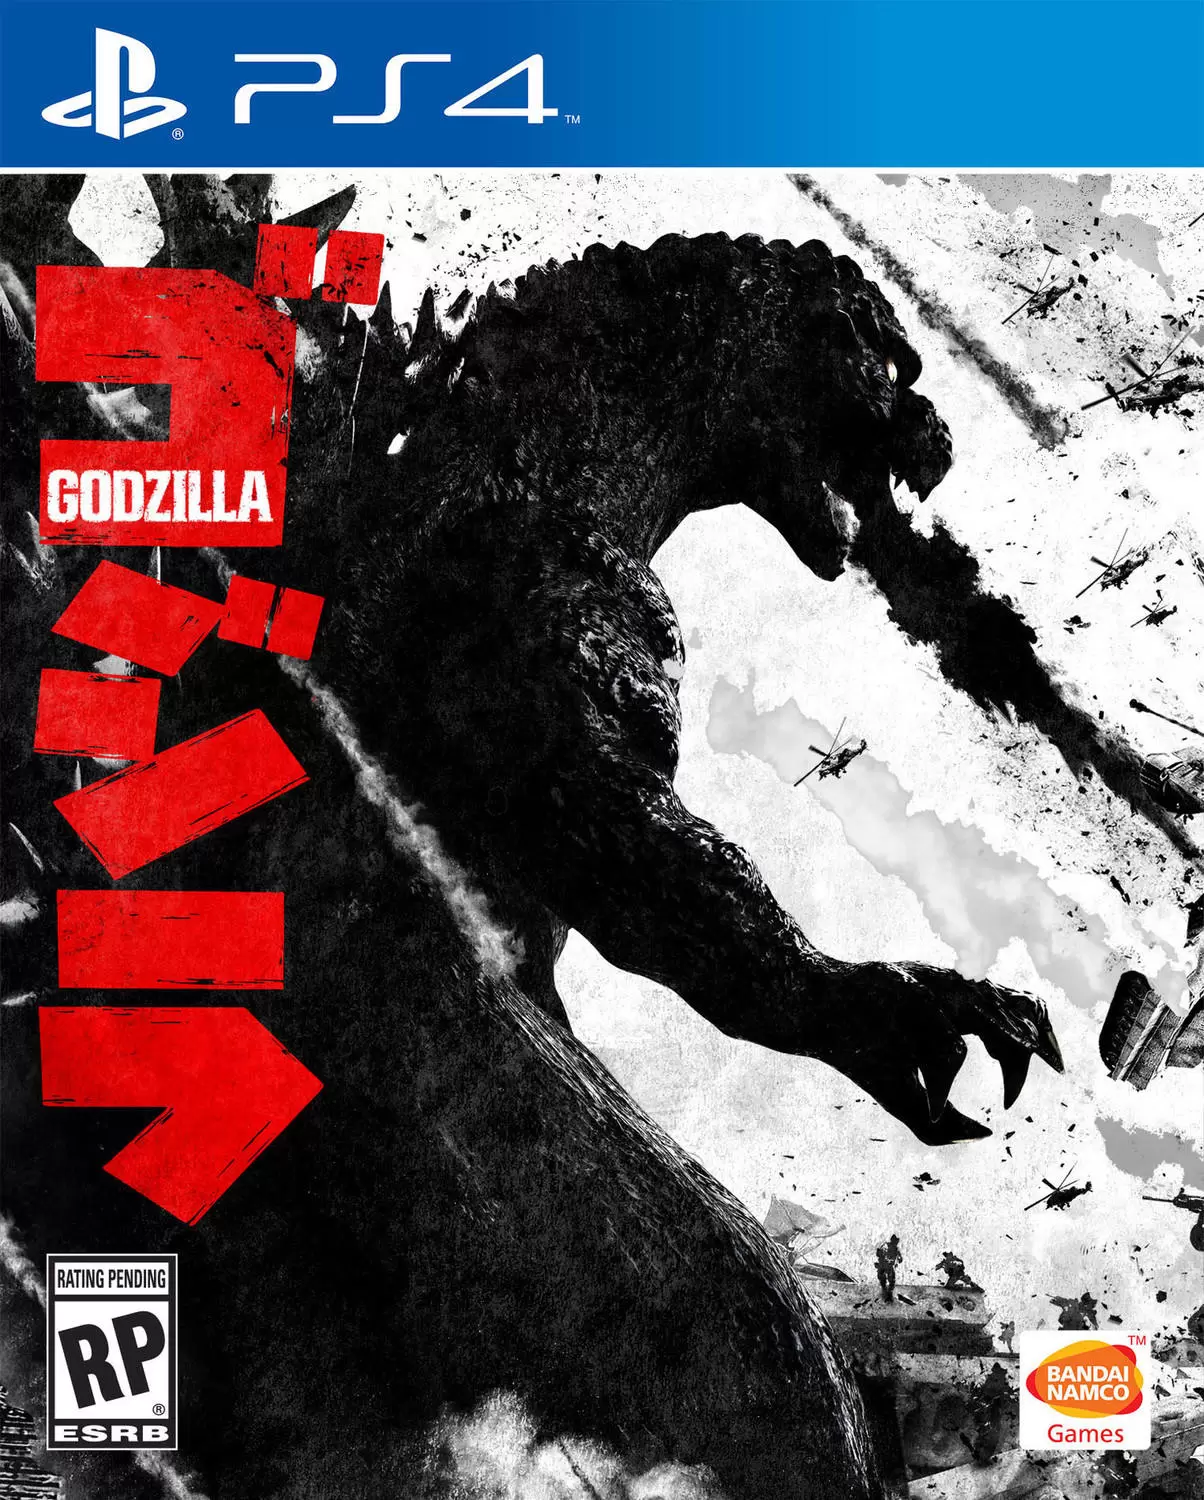 PS4 Games - Godzilla